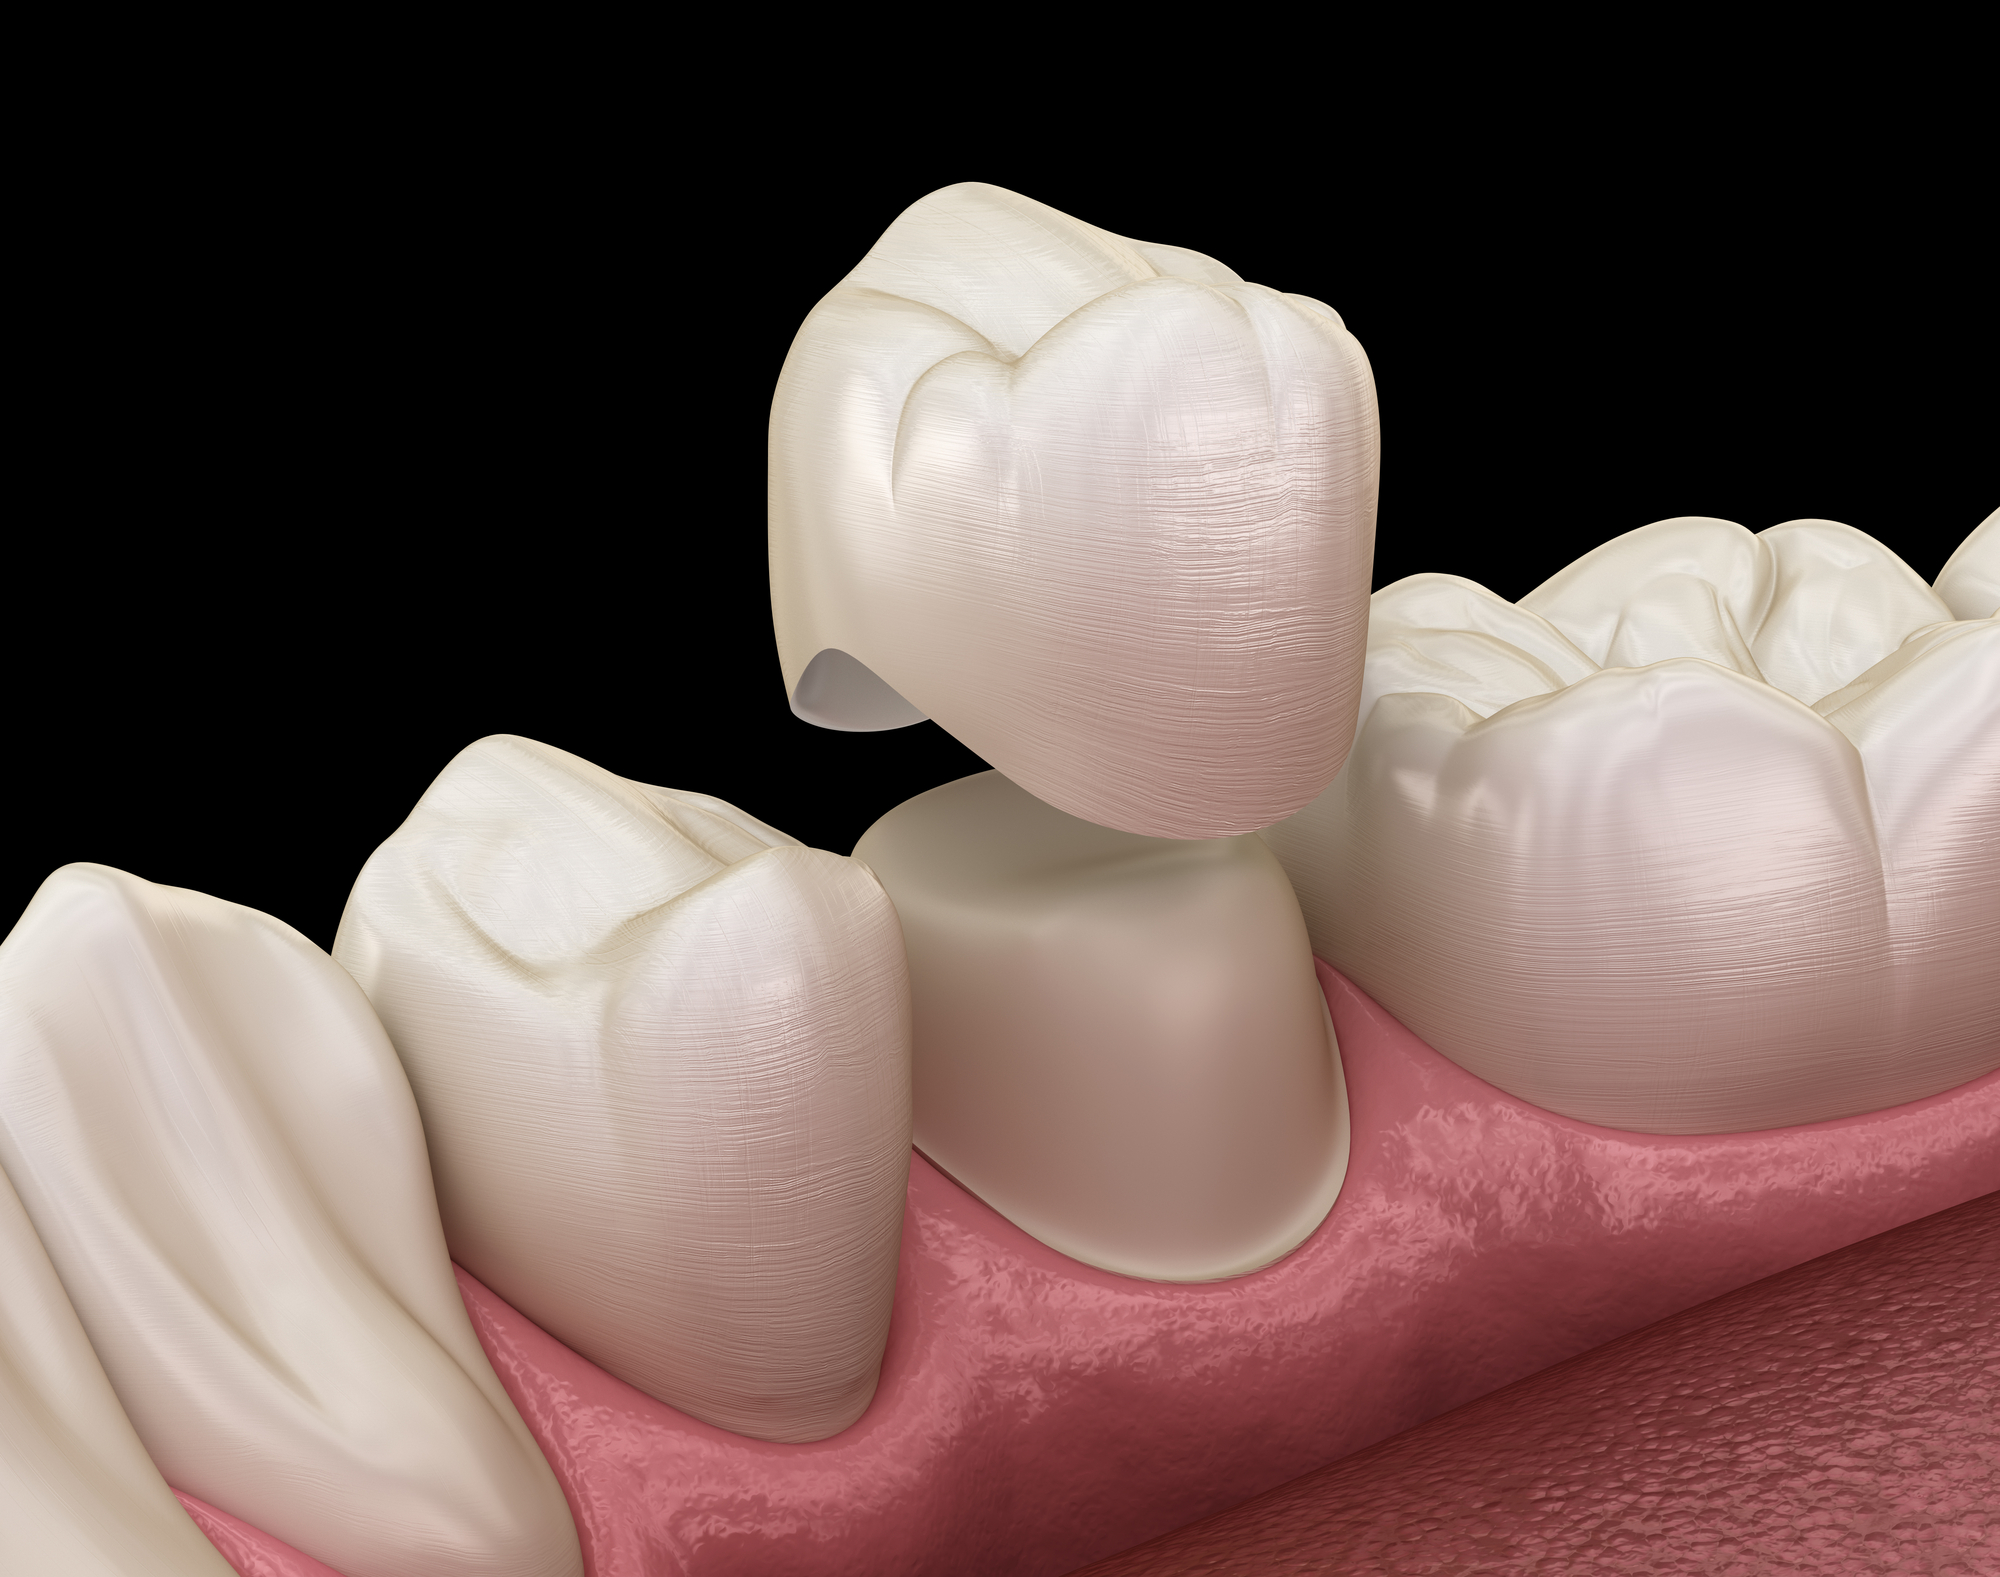 dental crown being placed over premolar